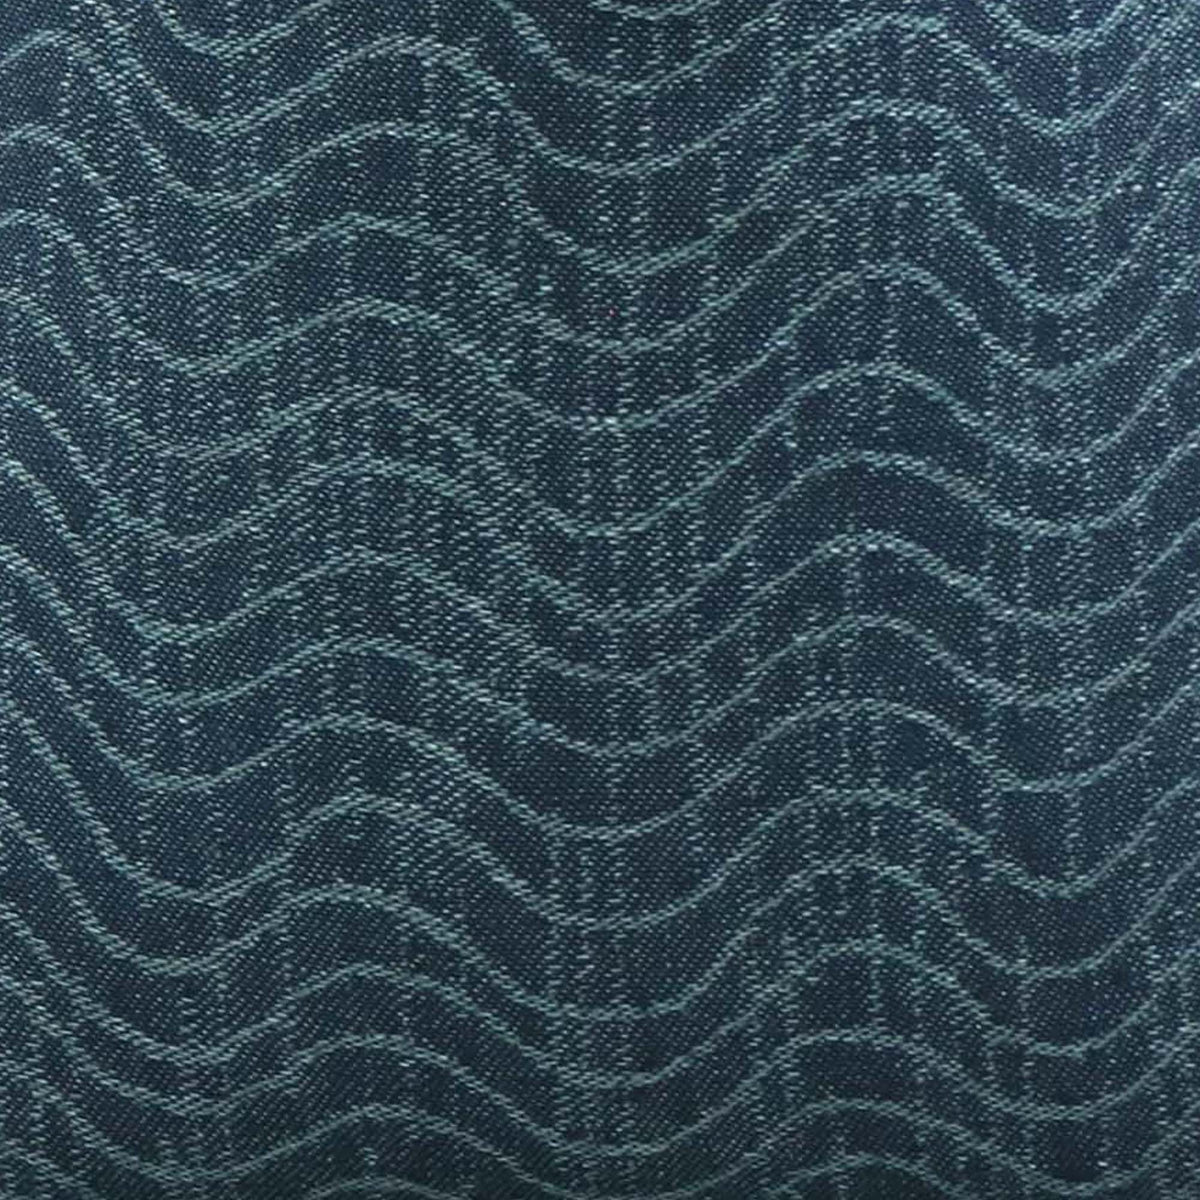 Dadami Woven Marlin Fabric Sample / 4x4 inch Fabric Swatch